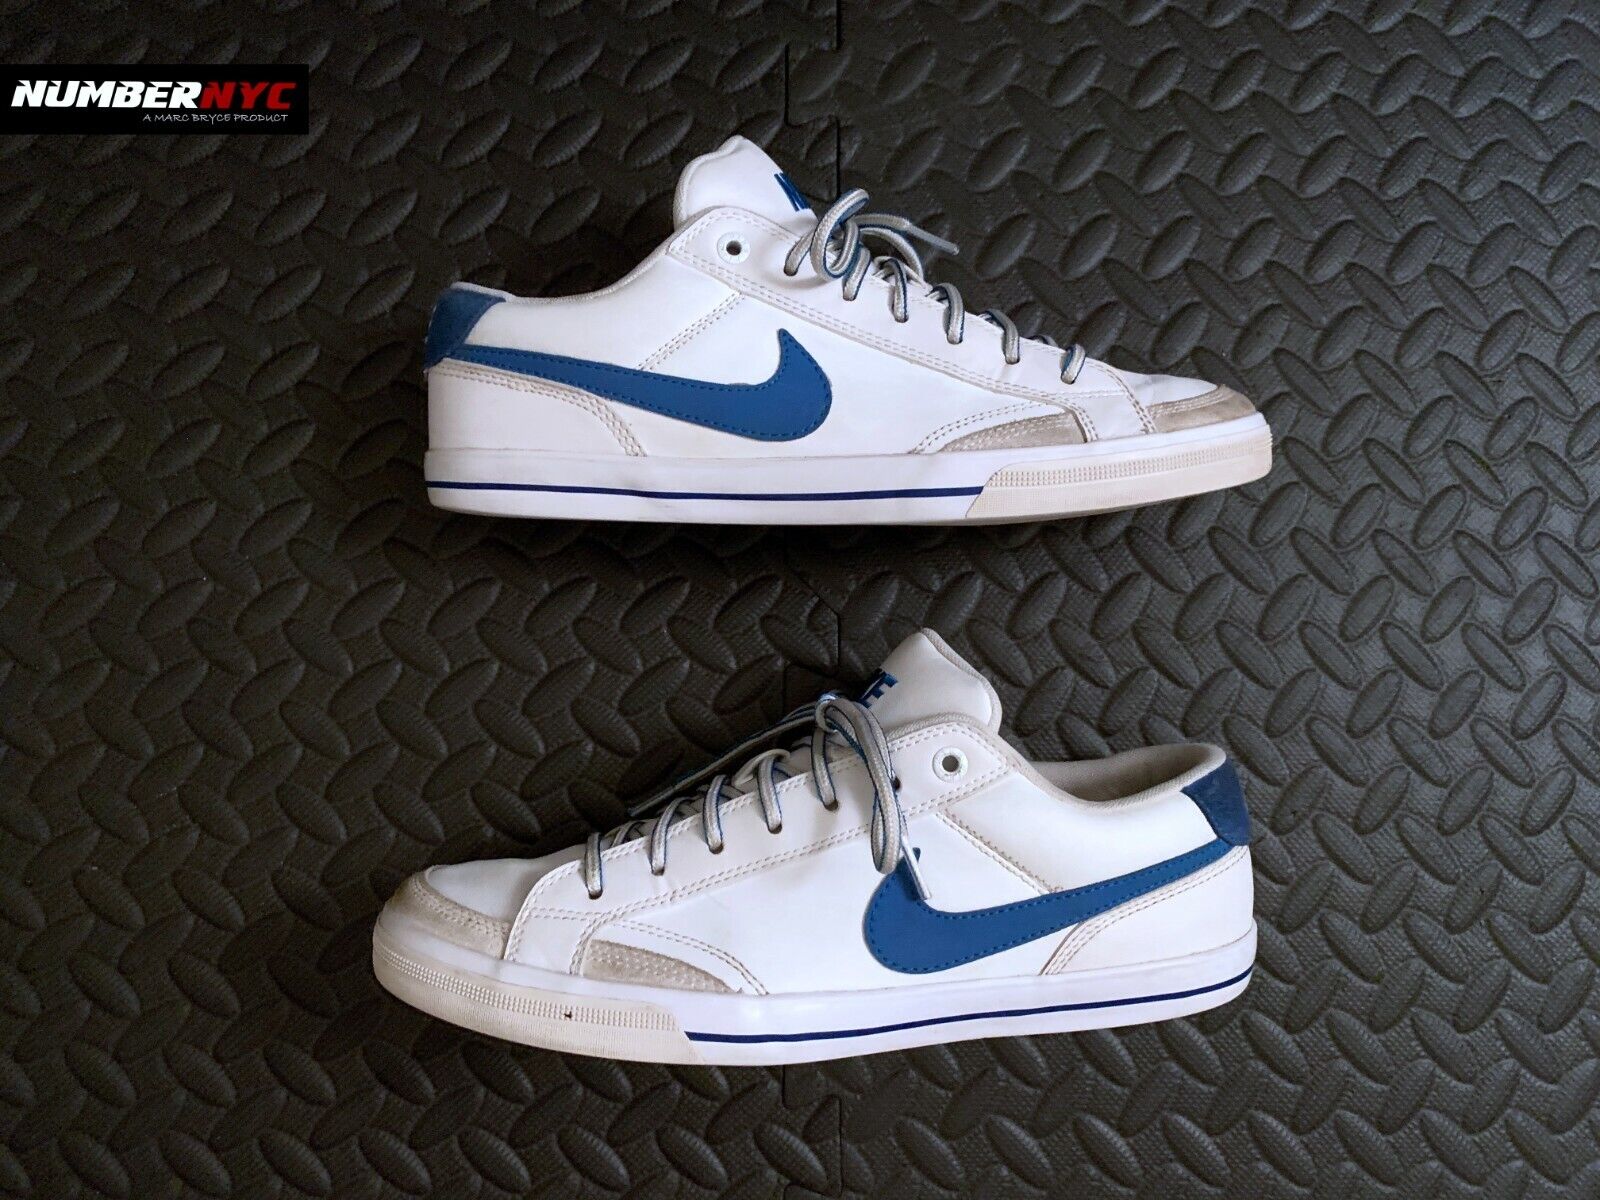 Nike Capri White Blue Leather Sneakers Court Low Tennis Shoes Women Size 8.5